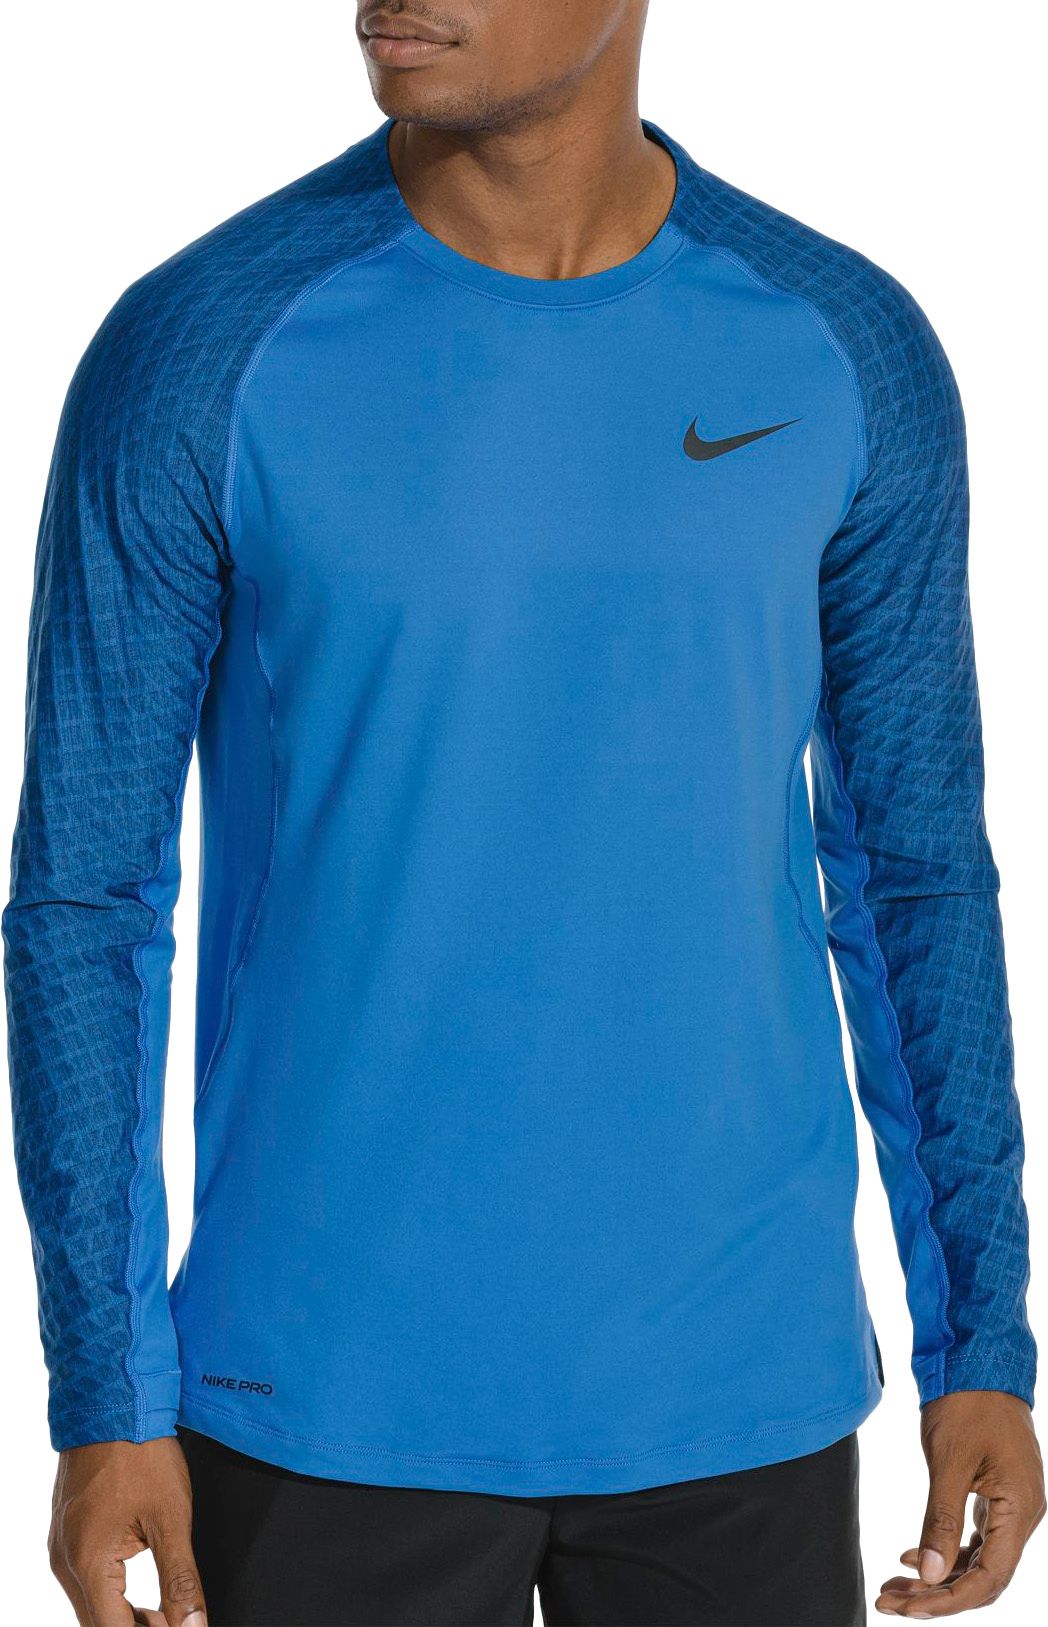 Nike Men's Pro Training Long Sleeve Shirt - .97 - .75